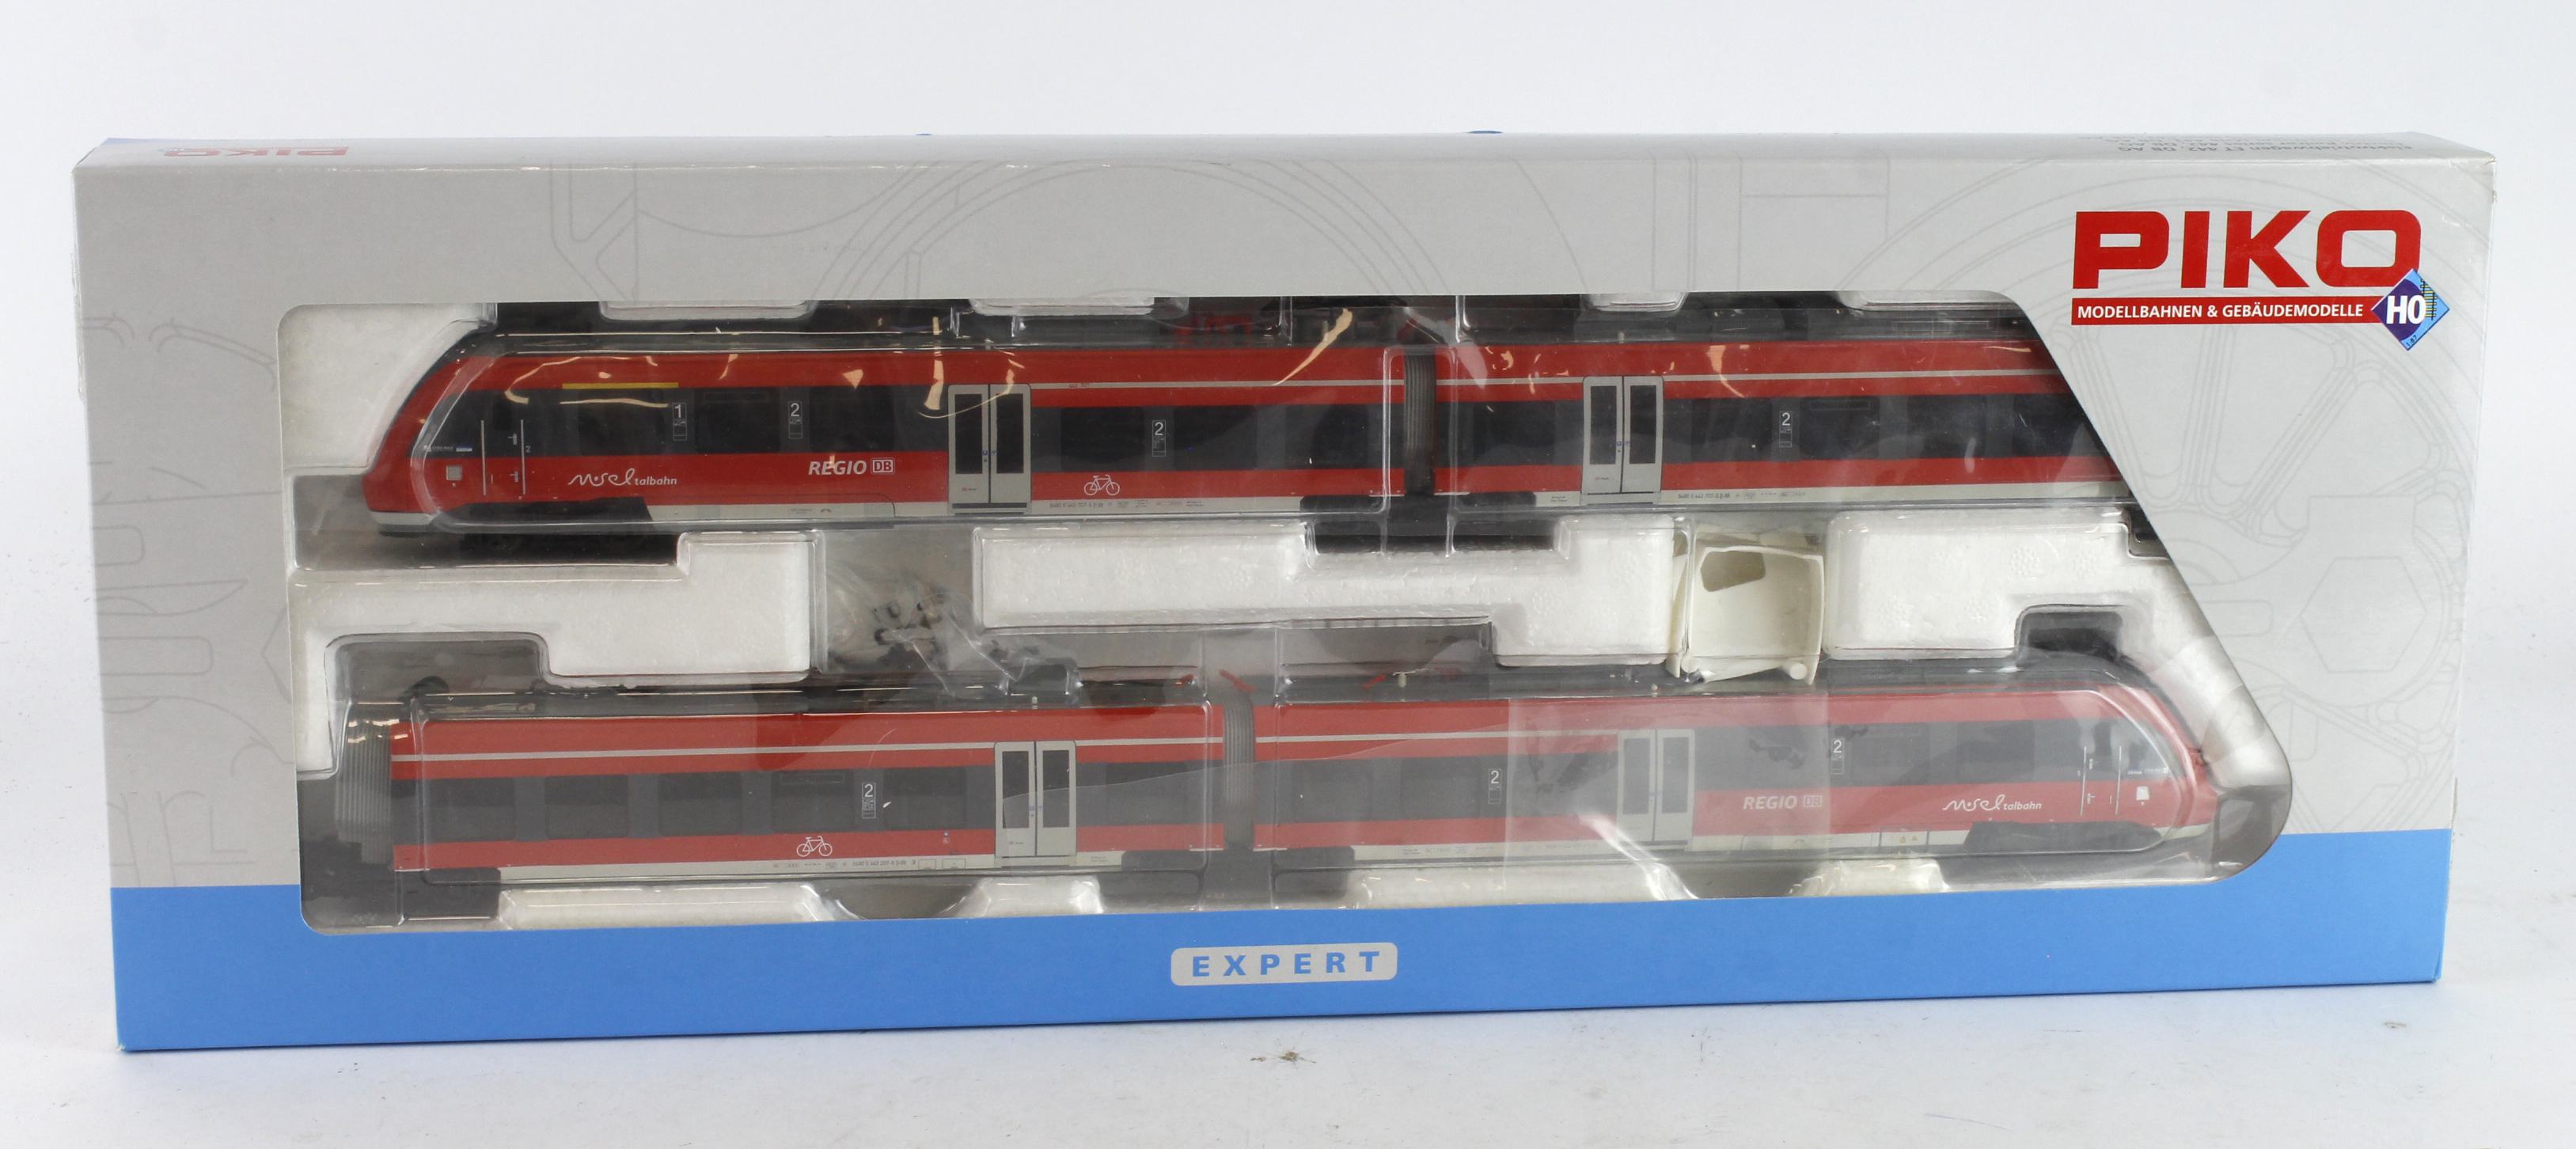 Piko boxed HO gauge DBAG 442 Talent 11 4 Car Railcar Regio DB Mosel Talbahn (59500)